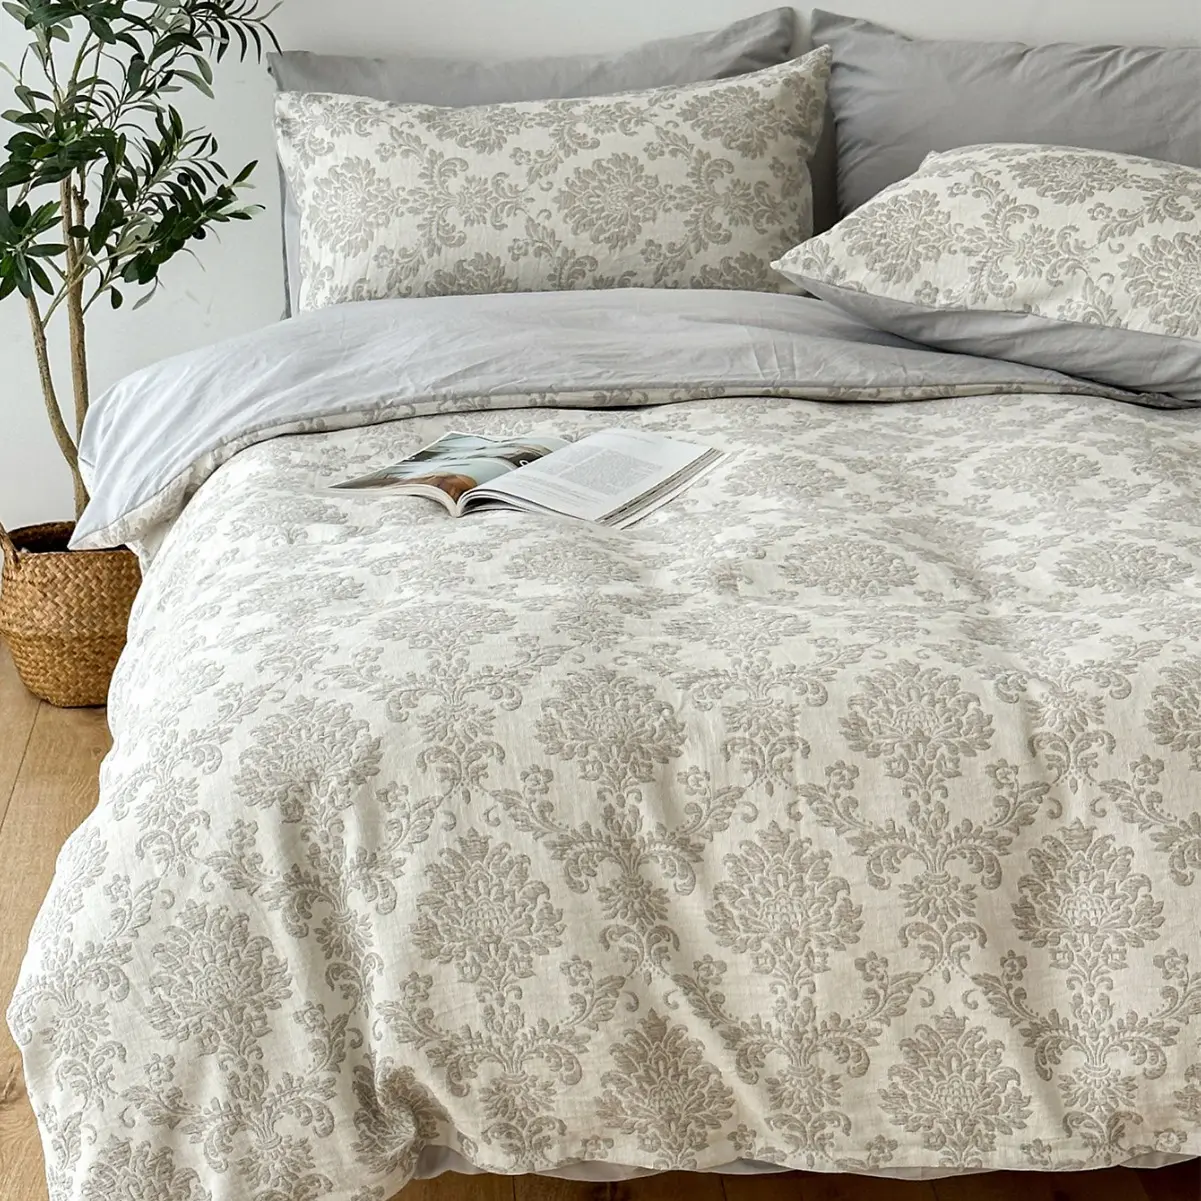 Manufacturer's hot selling cotton jacquard gauze three-piece set sheet quilt cover quilt bedding